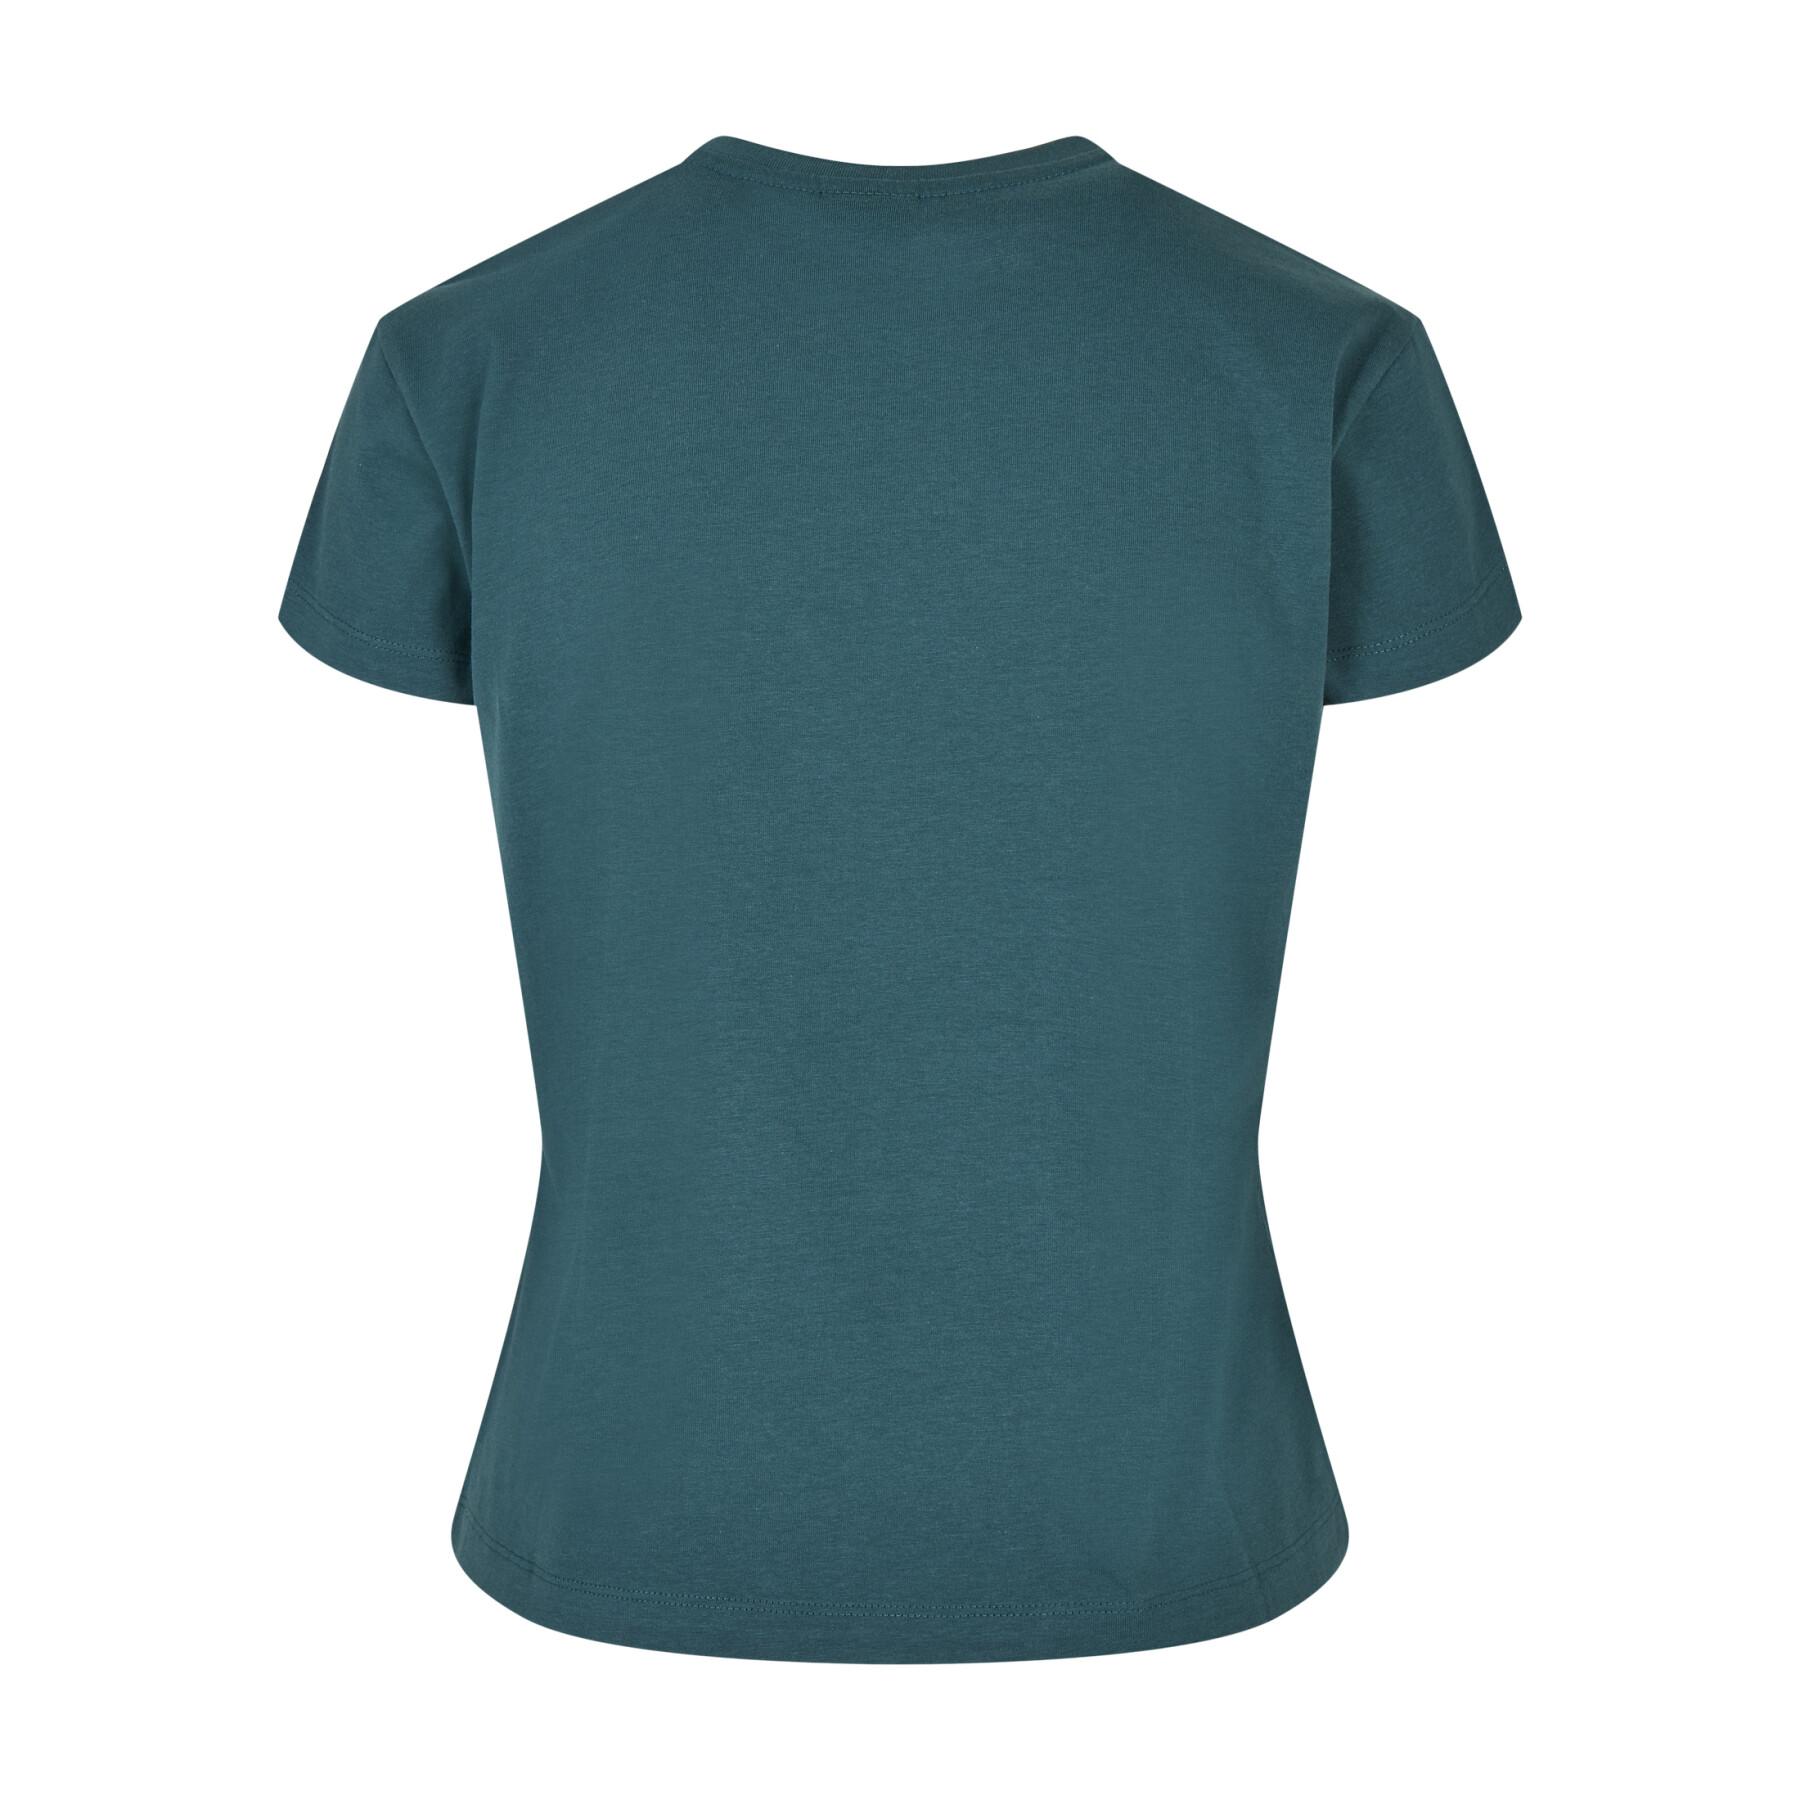 Women's T-shirt Urban Classics basic box- large sizes